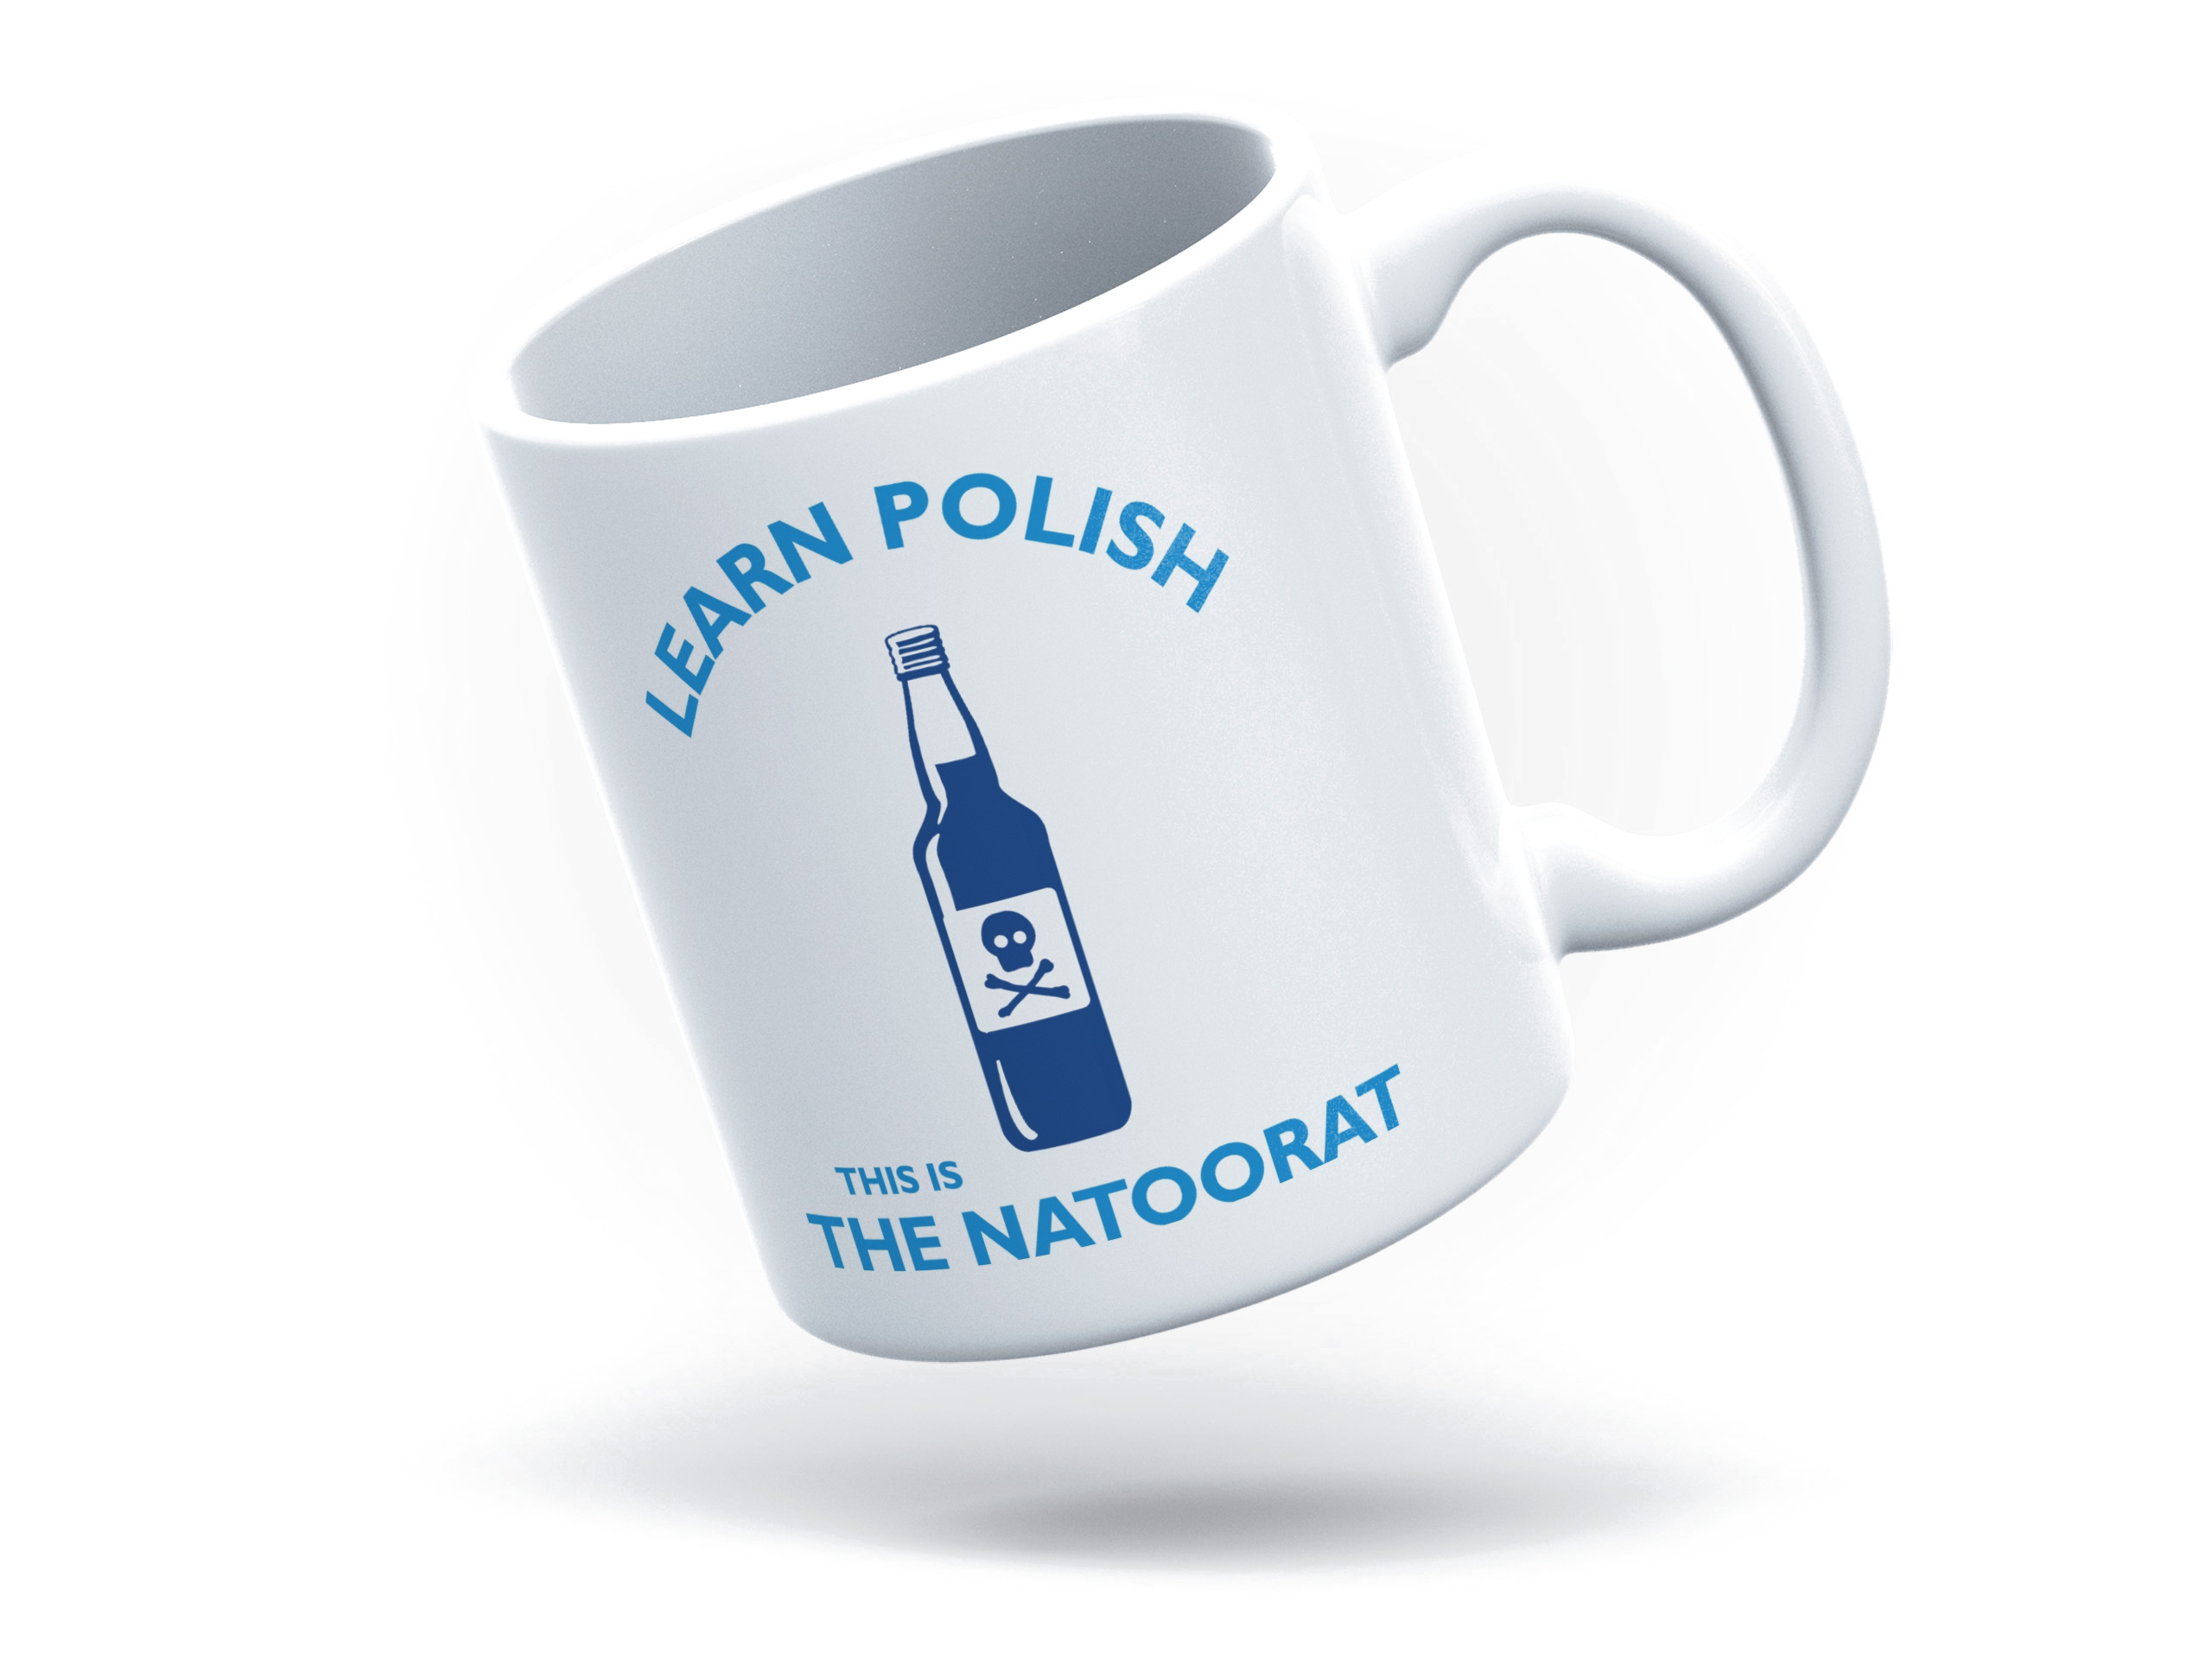 Learn Polish The Natoorat - Kubek Biały